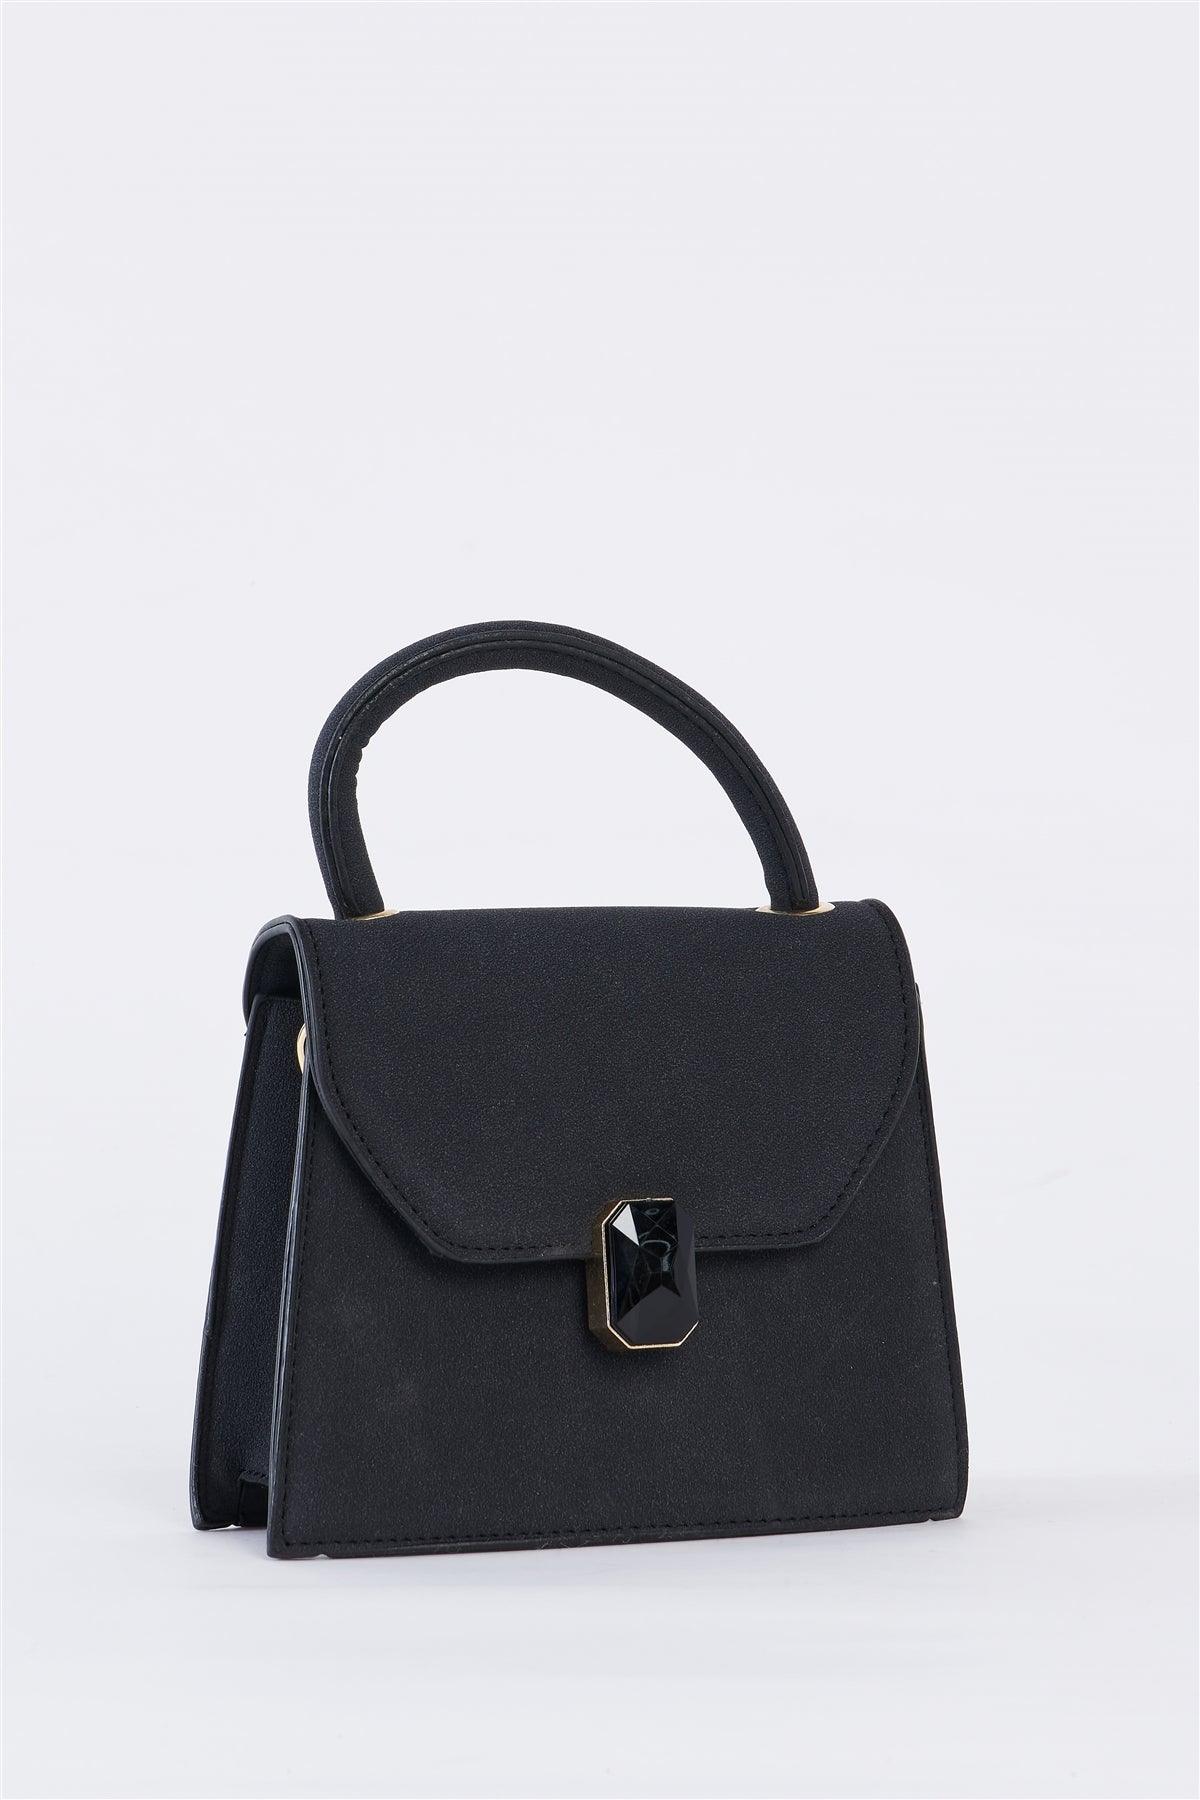 Black Vintage Inspired Purse With Gem Closure Detail /6 Bags